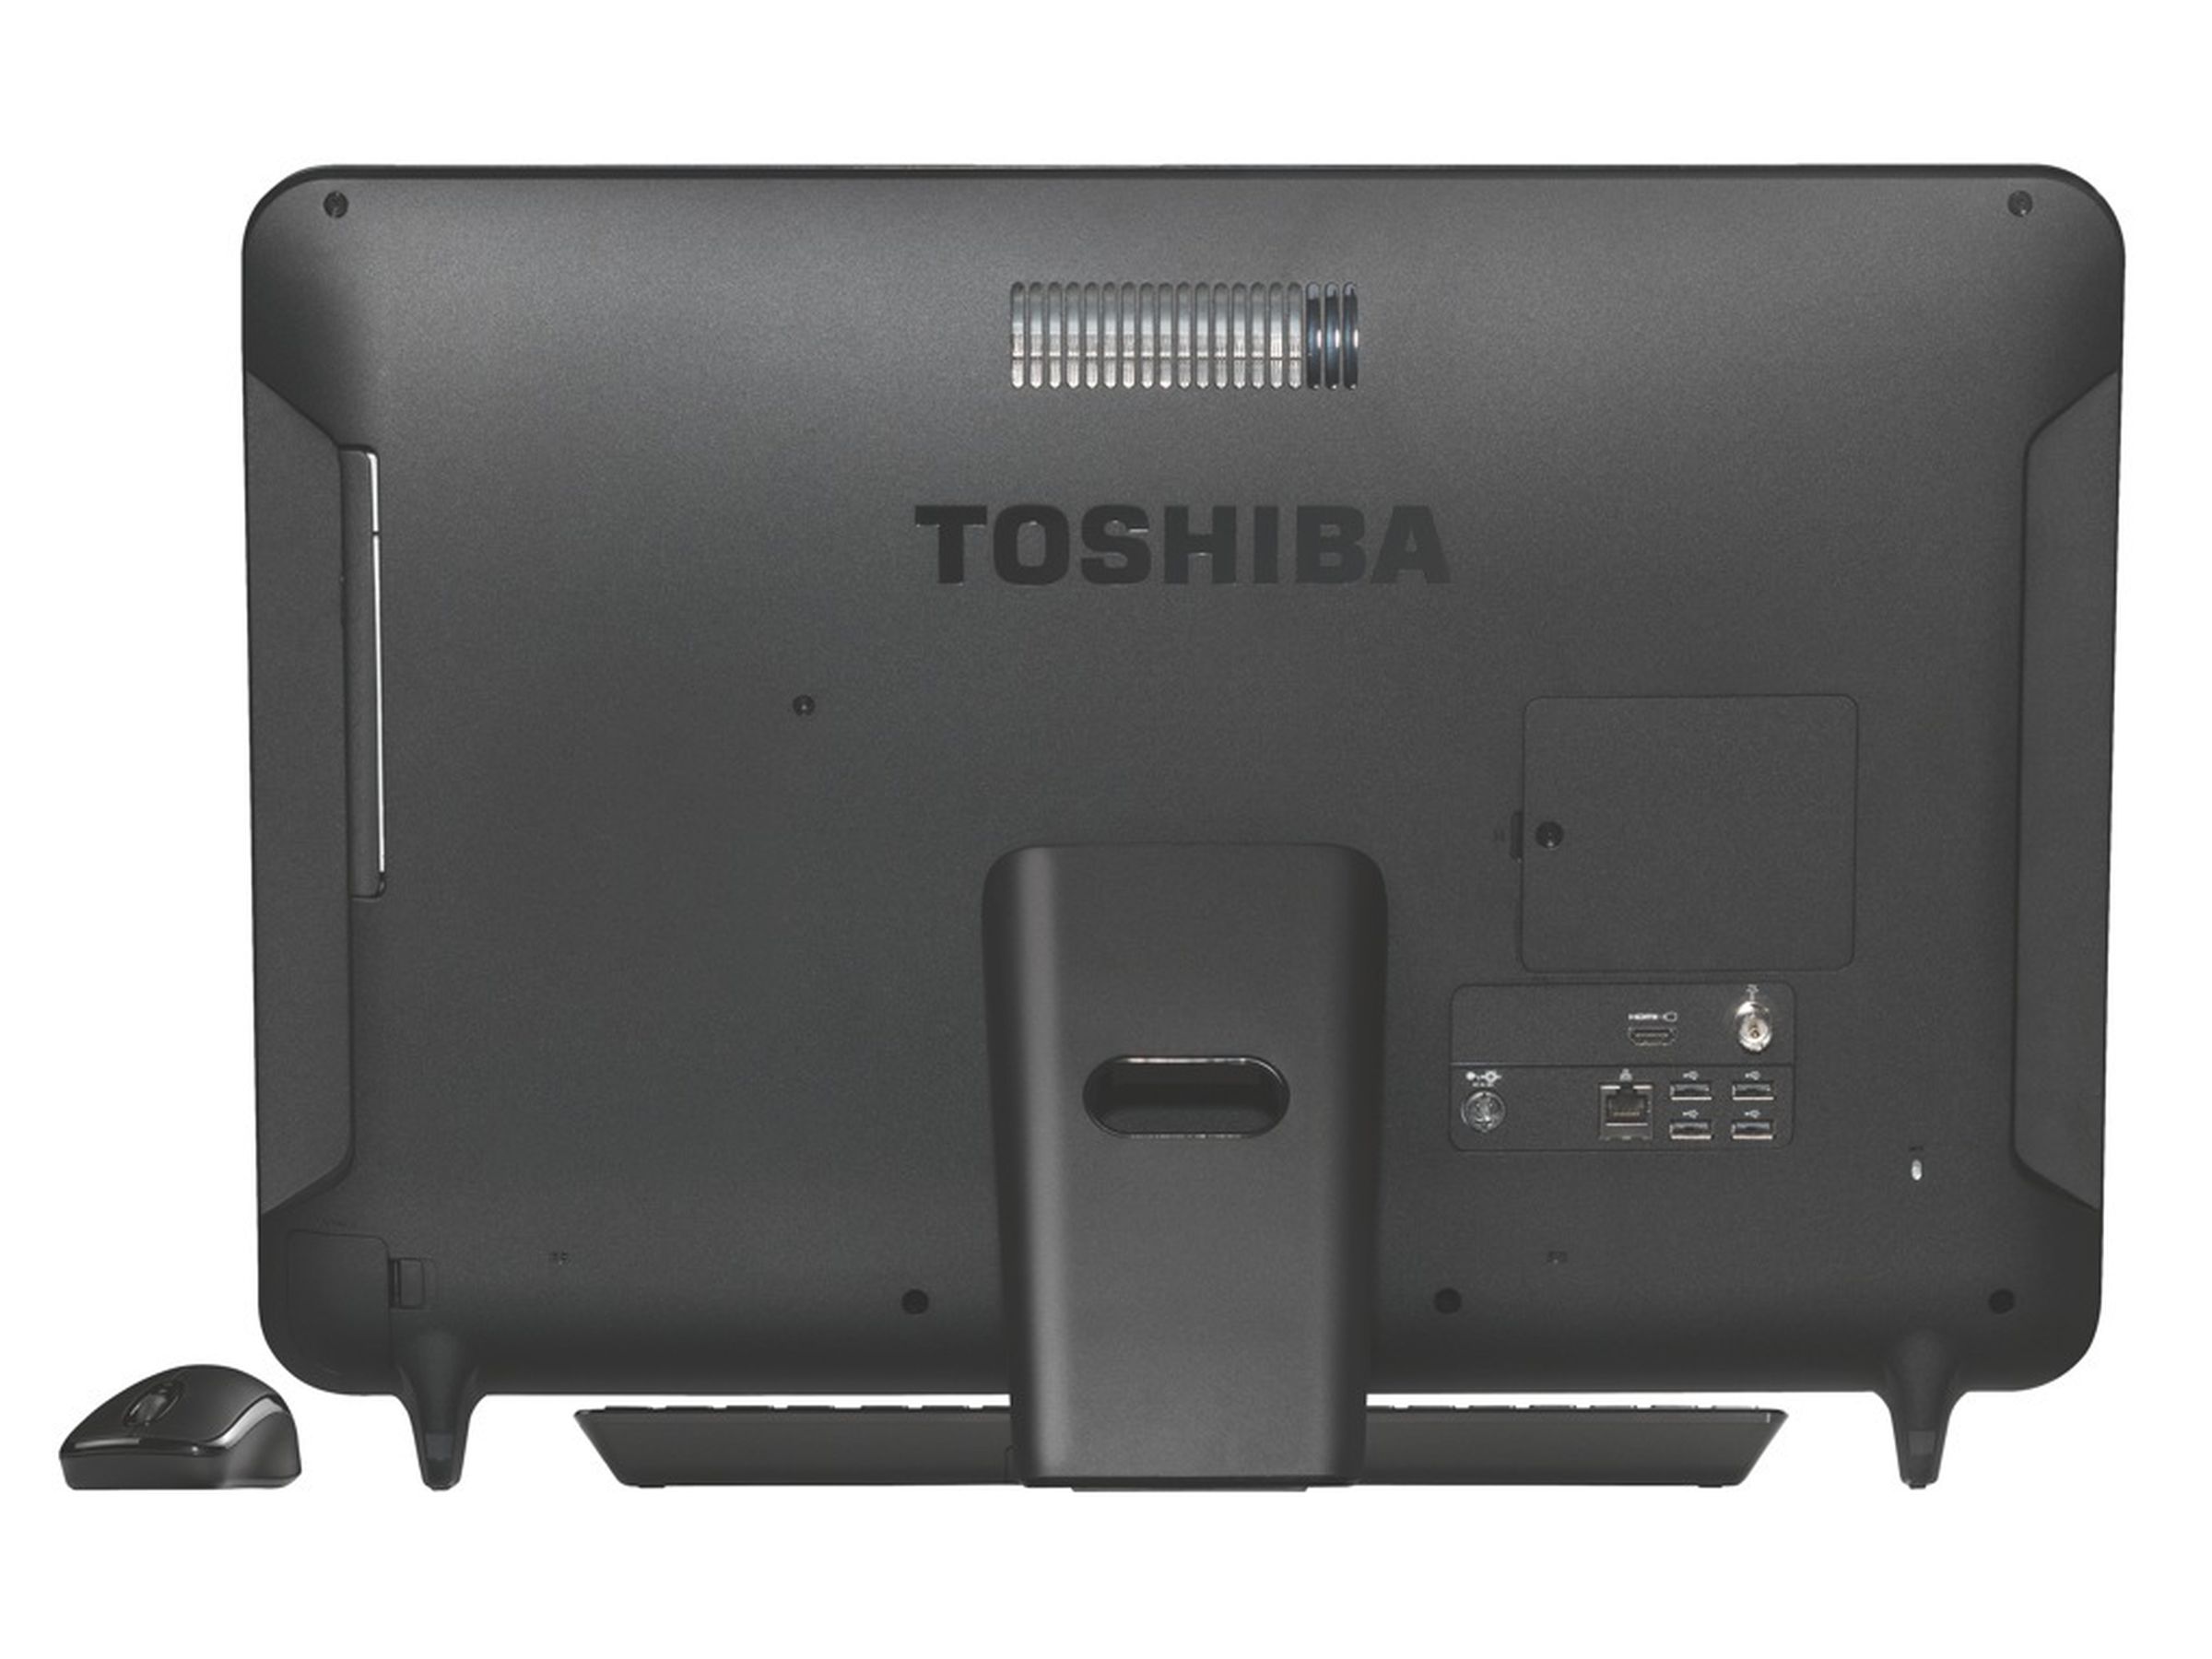 Toshiba LX830 press images